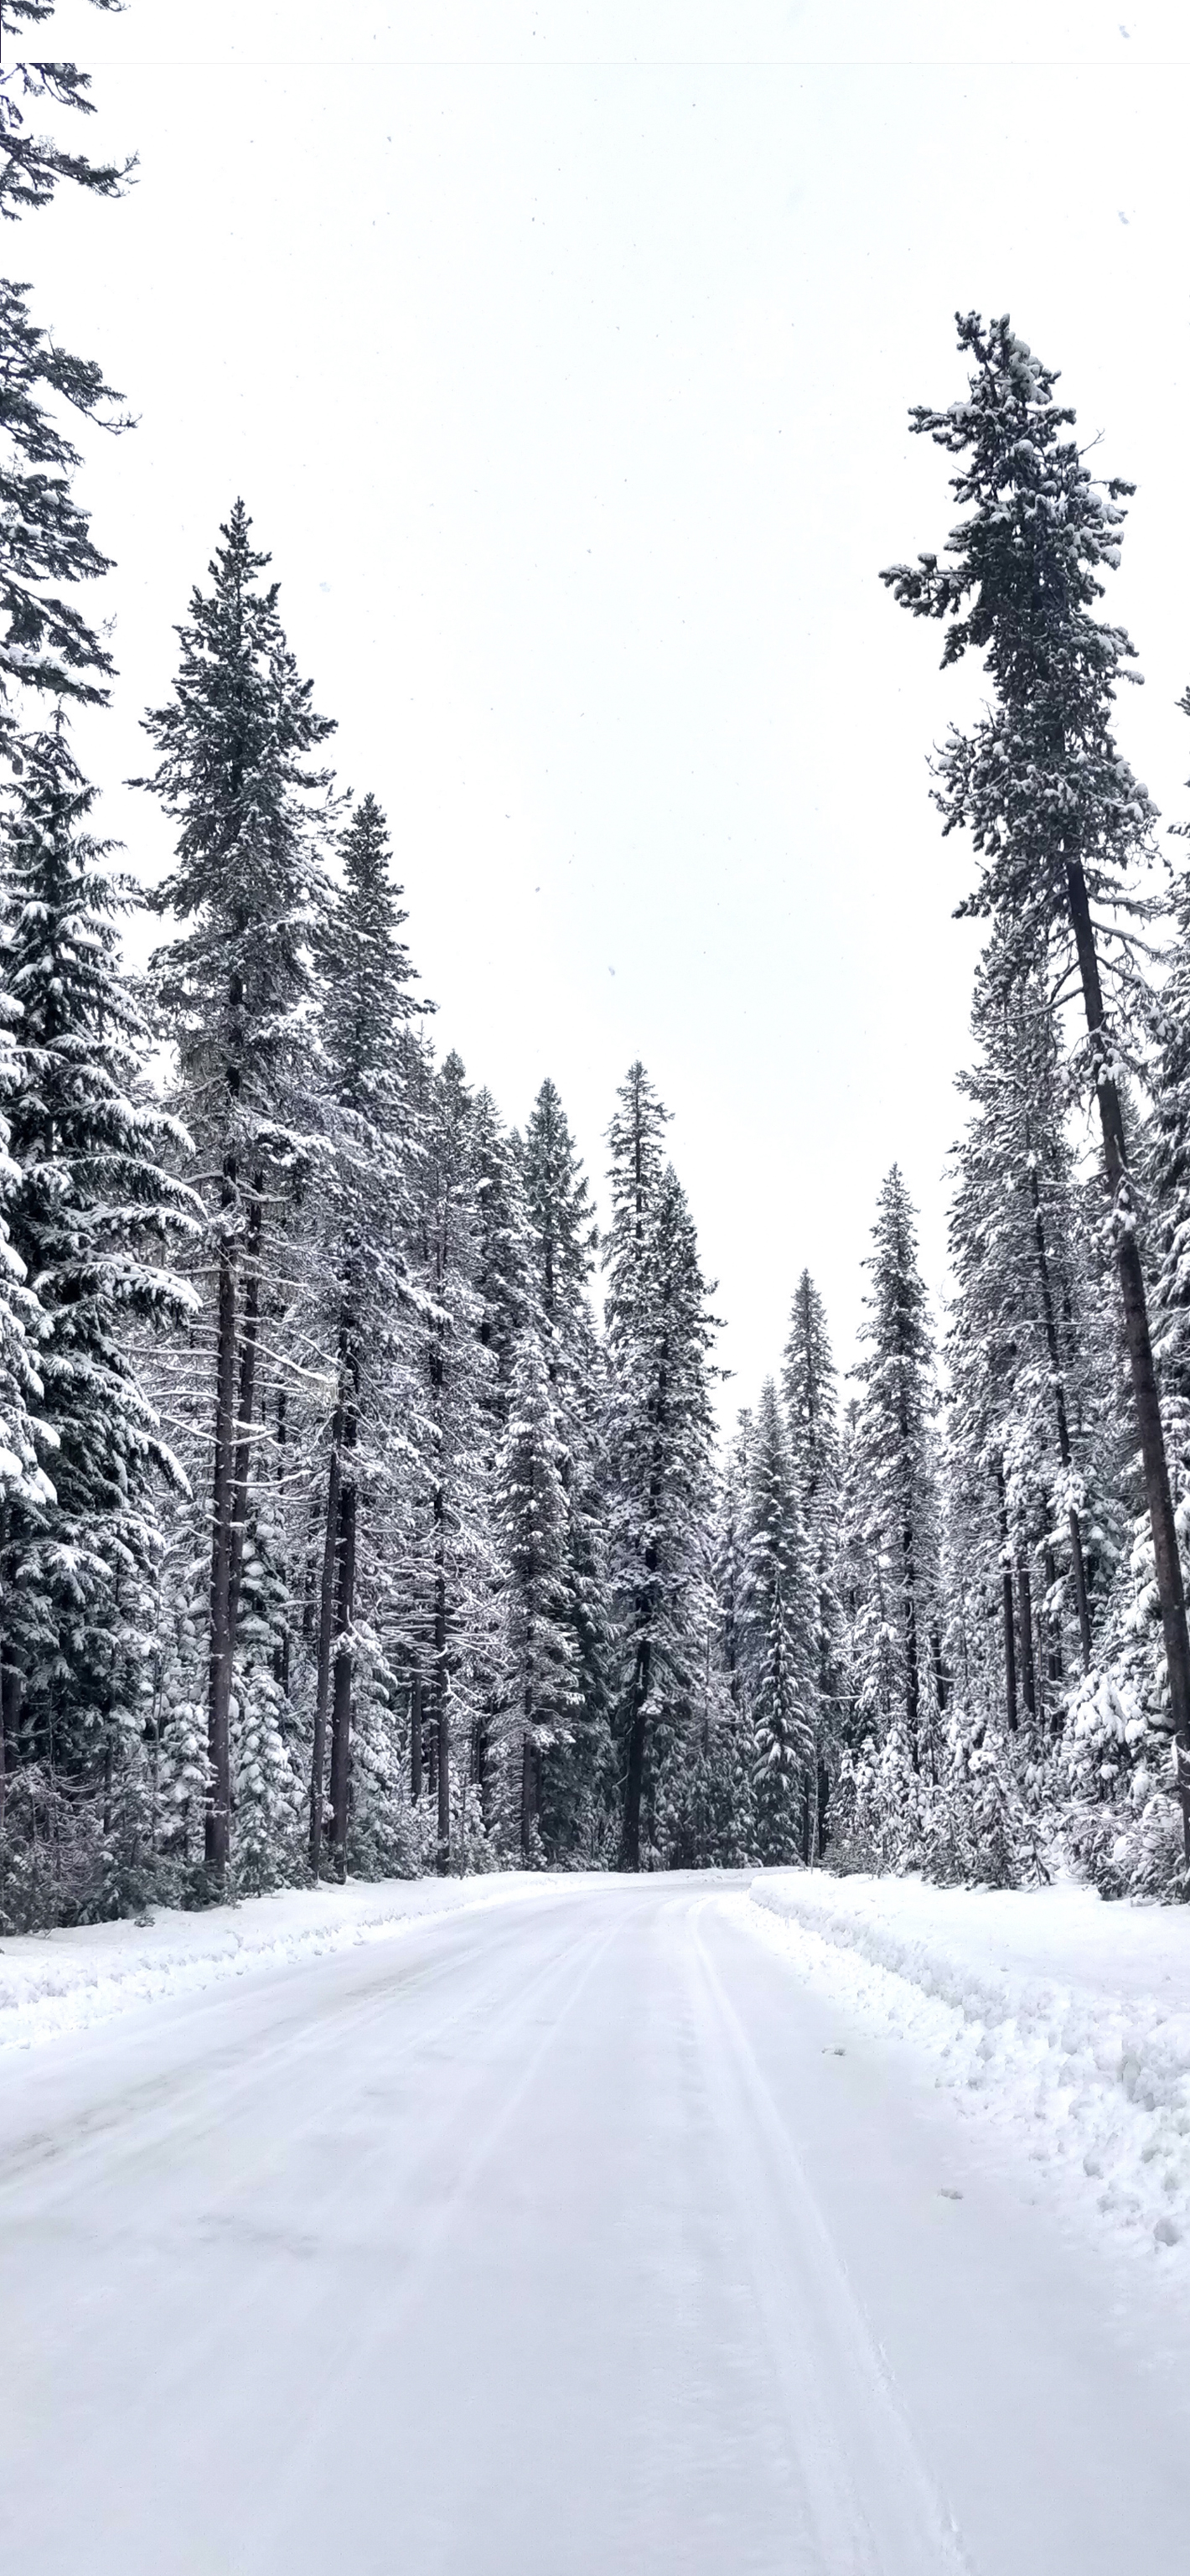 Dark Snowy Forest Images  Free Download on Freepik